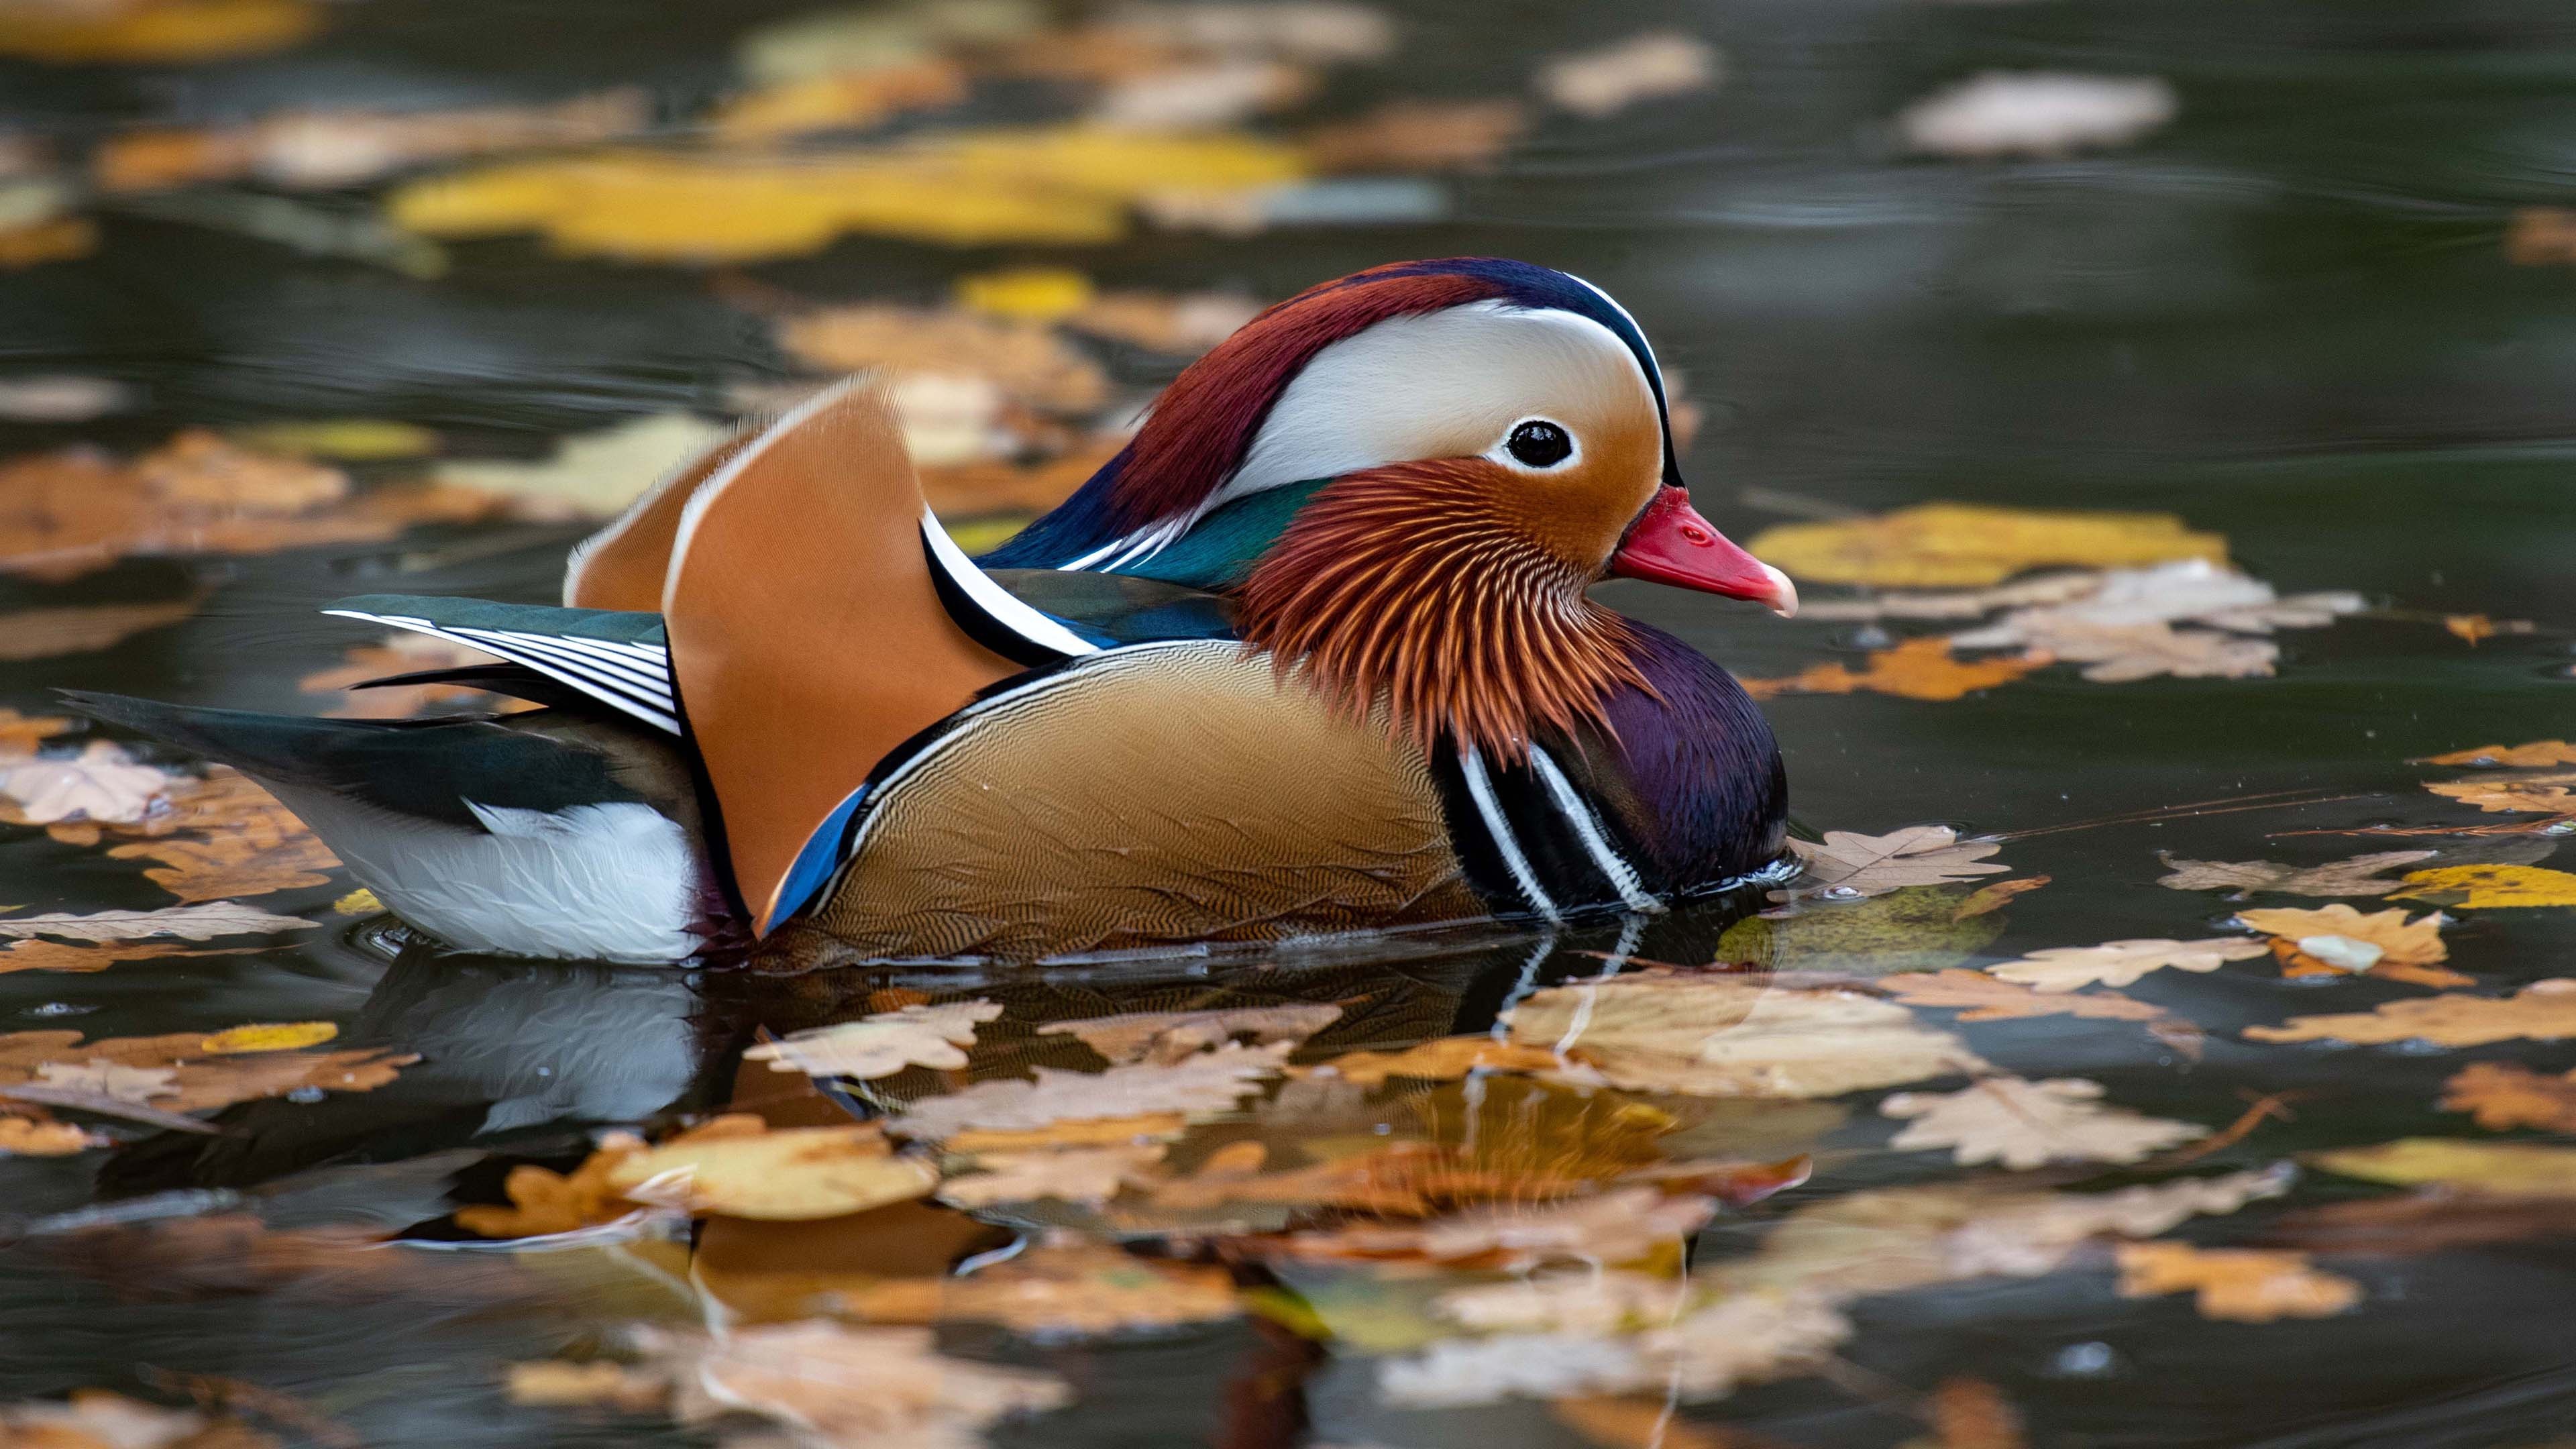 Autumn foliage wallpaper, Beautiful pond scene, Majestic duck, Vibrant colors, 3840x2160 4K Desktop